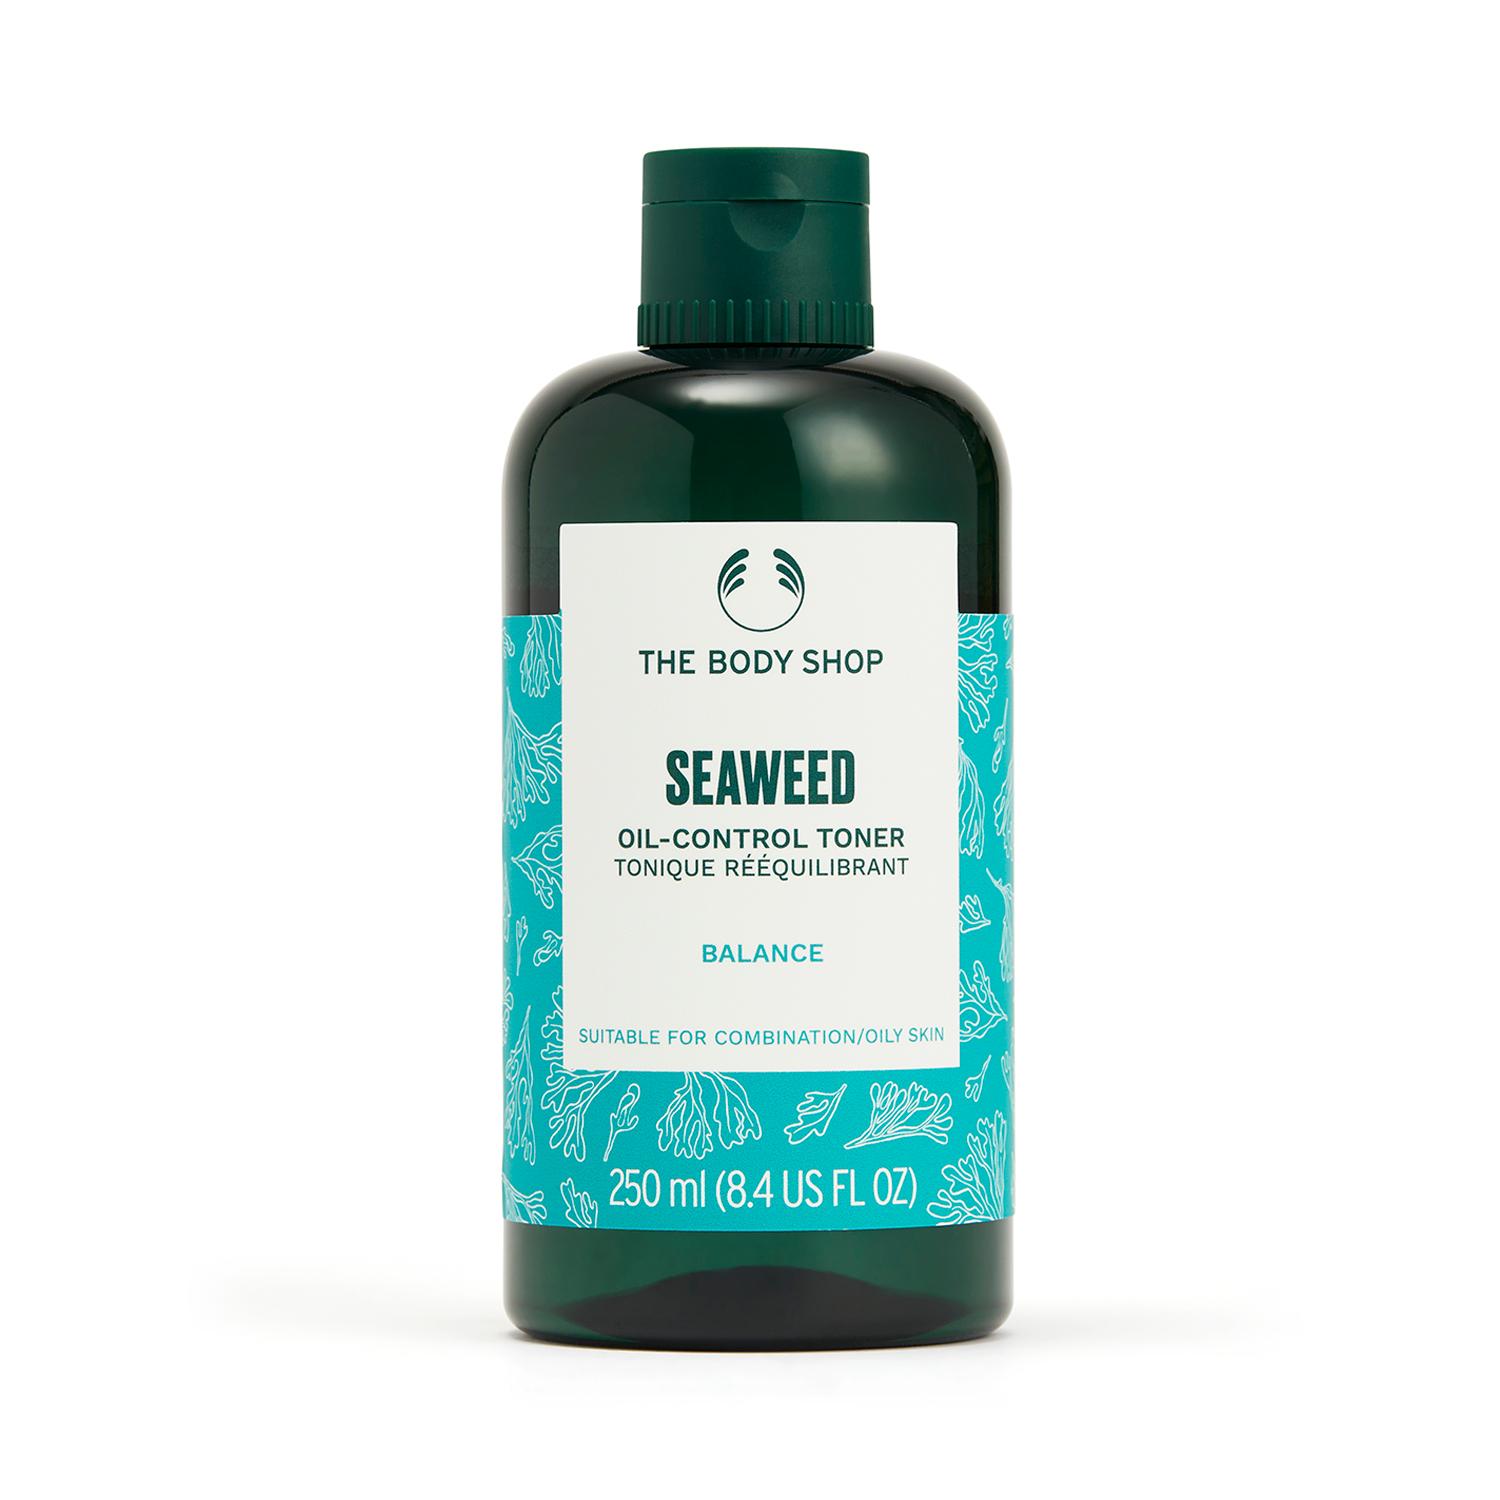 The Body Shop | The Body Shop Seaweed Oil Balancing Toner (250ml)